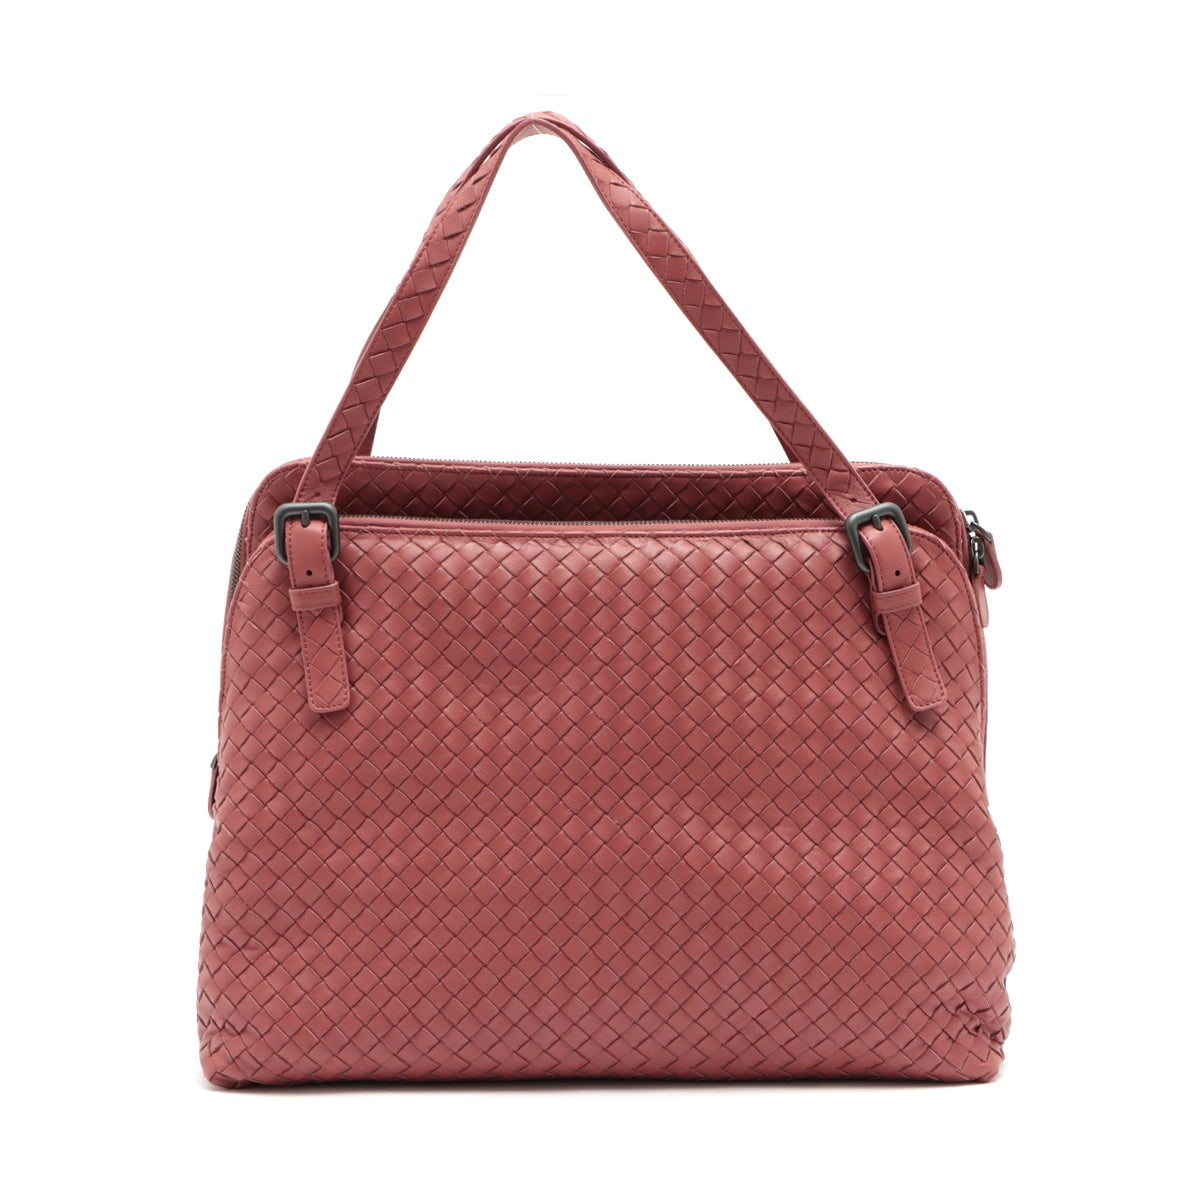 Bottega Veneta Intrecciato Leather Tote Bag Pink